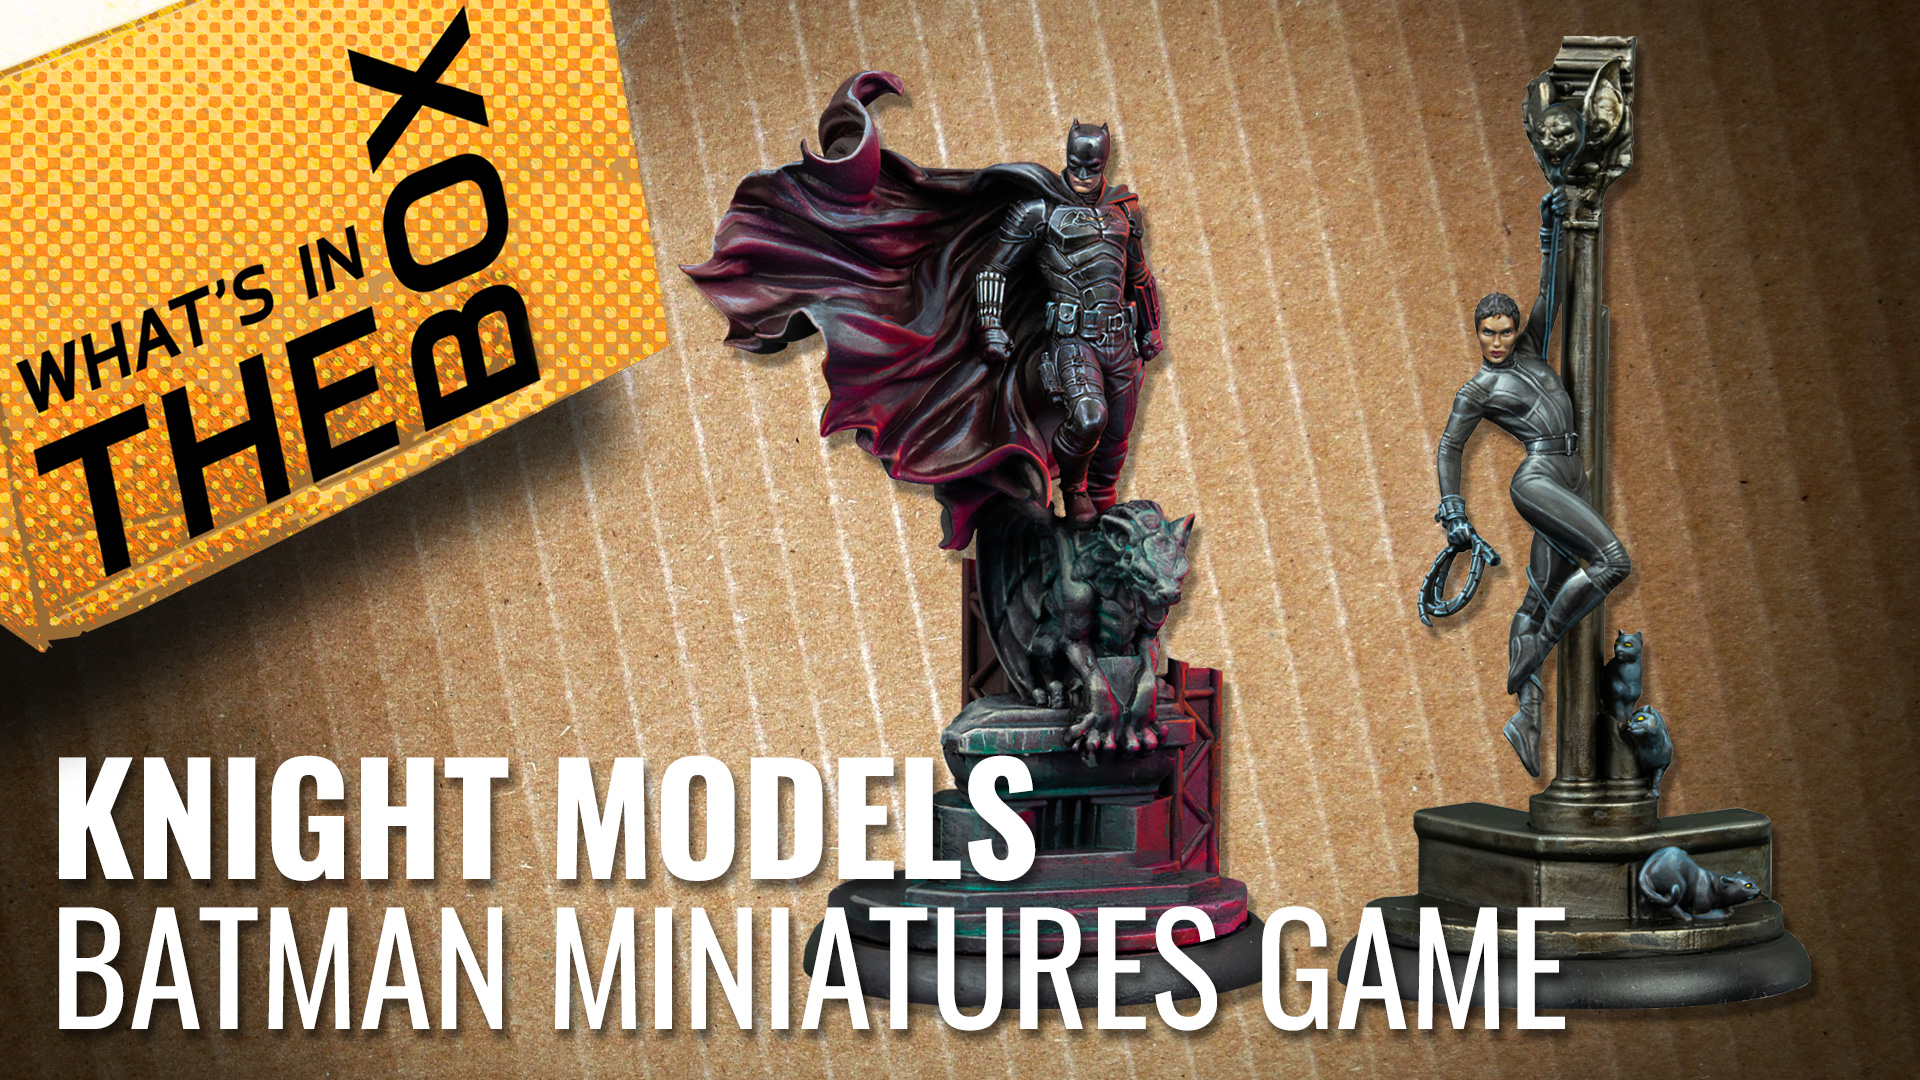 Batman-Miniatures-games-coverimage